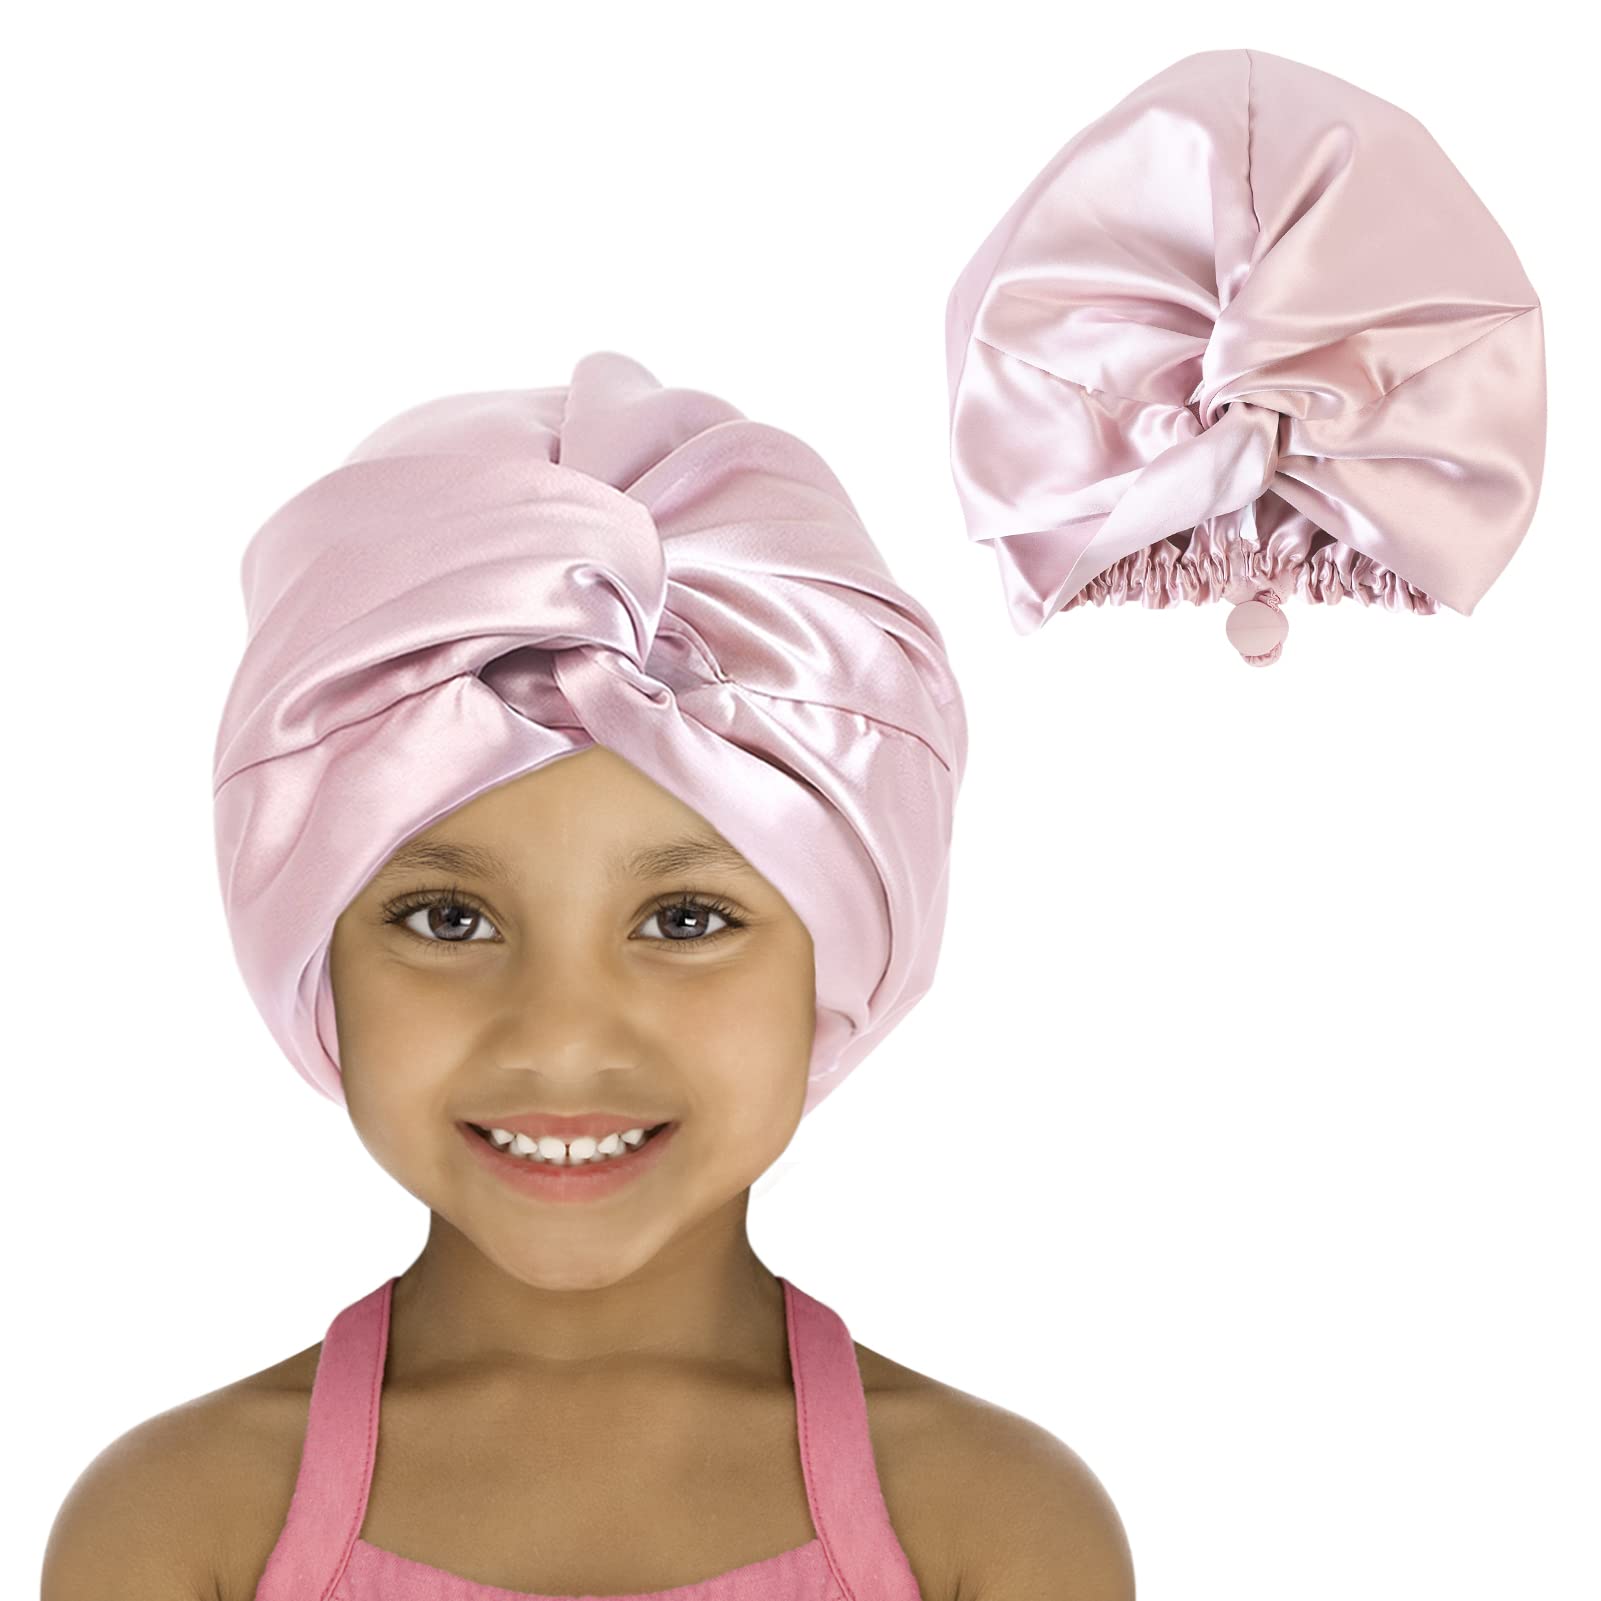  Arqumi Pack of 2 Satin Sleeping Bonnet for Kids, Soft Satin  Sleep Bonnet with Elastic Strap, Adjustable Sleep Cap Hair Bonnet for  Children, Pink+Purple : Beauty & Personal Care